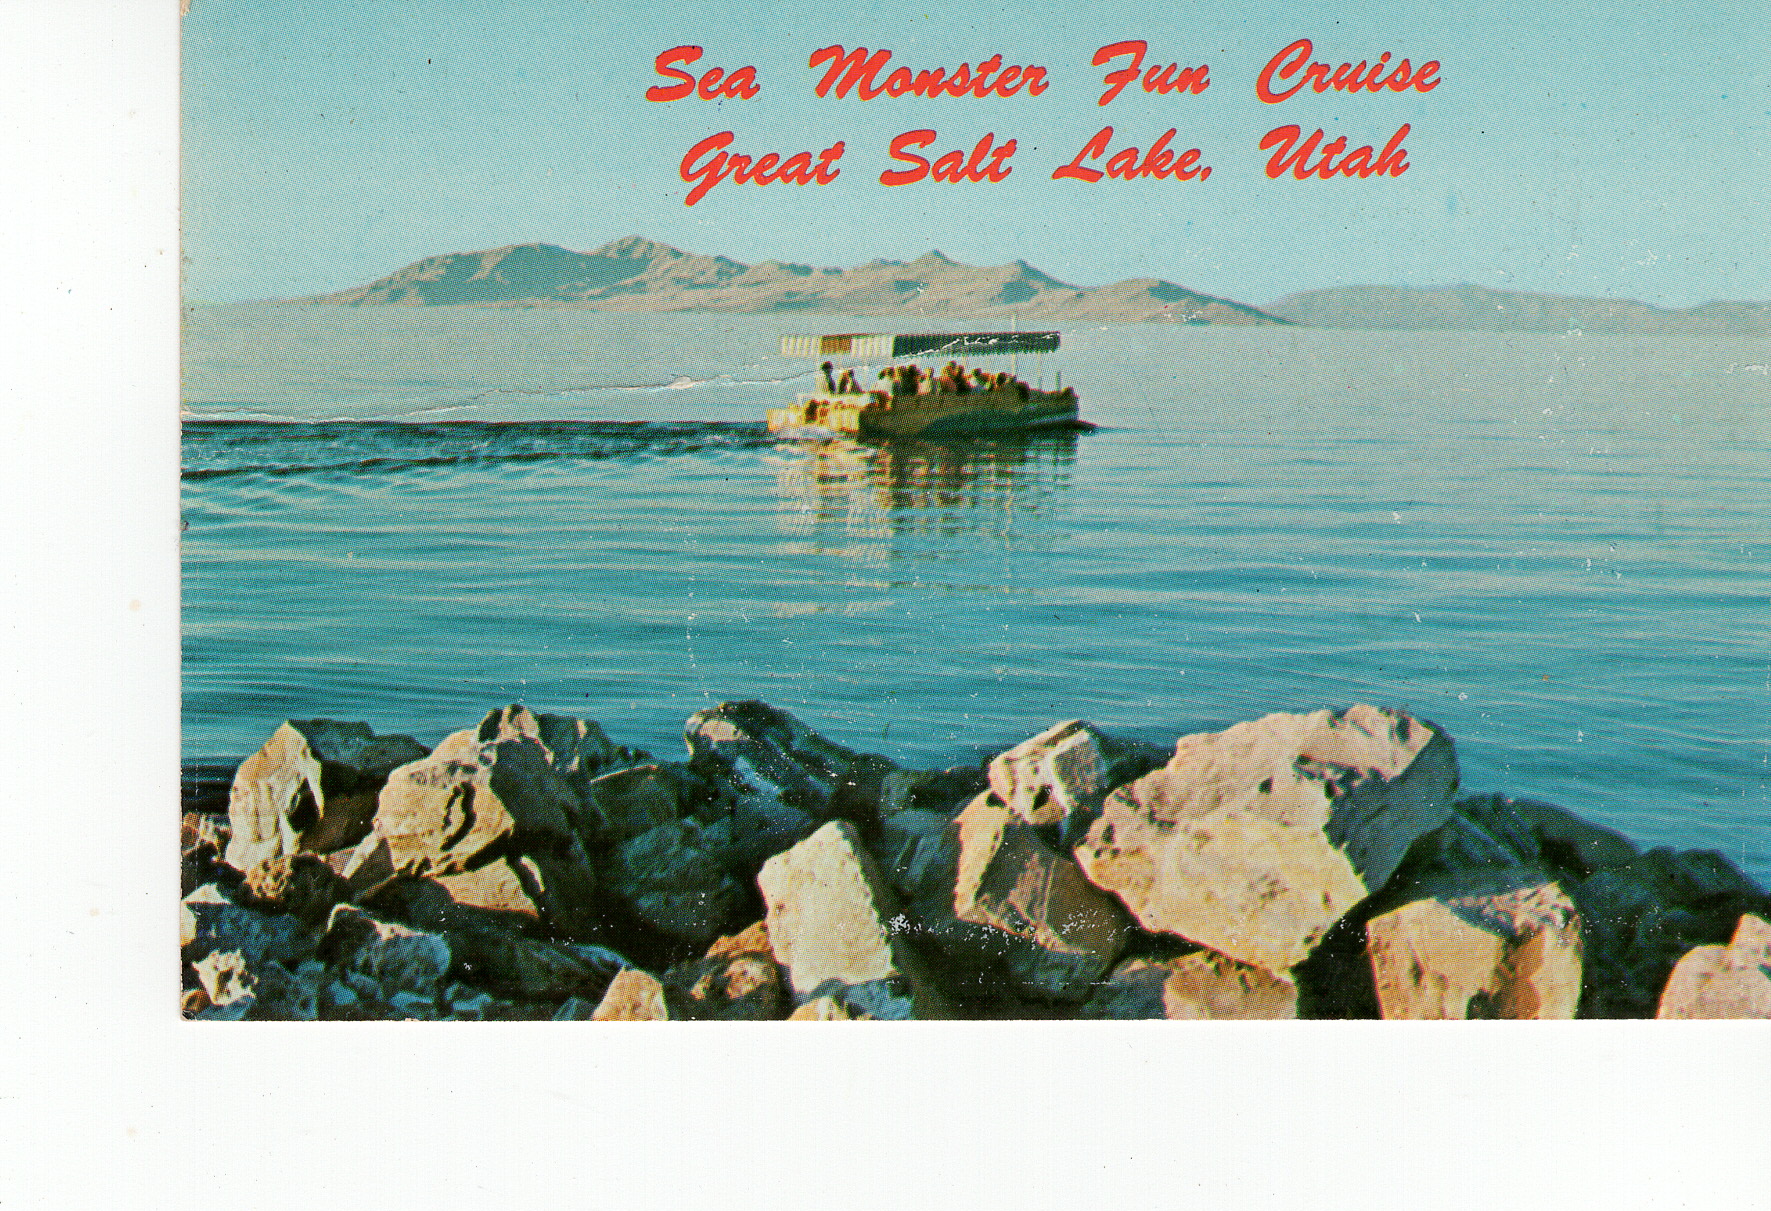 Great Salt Lake Fun Cruise